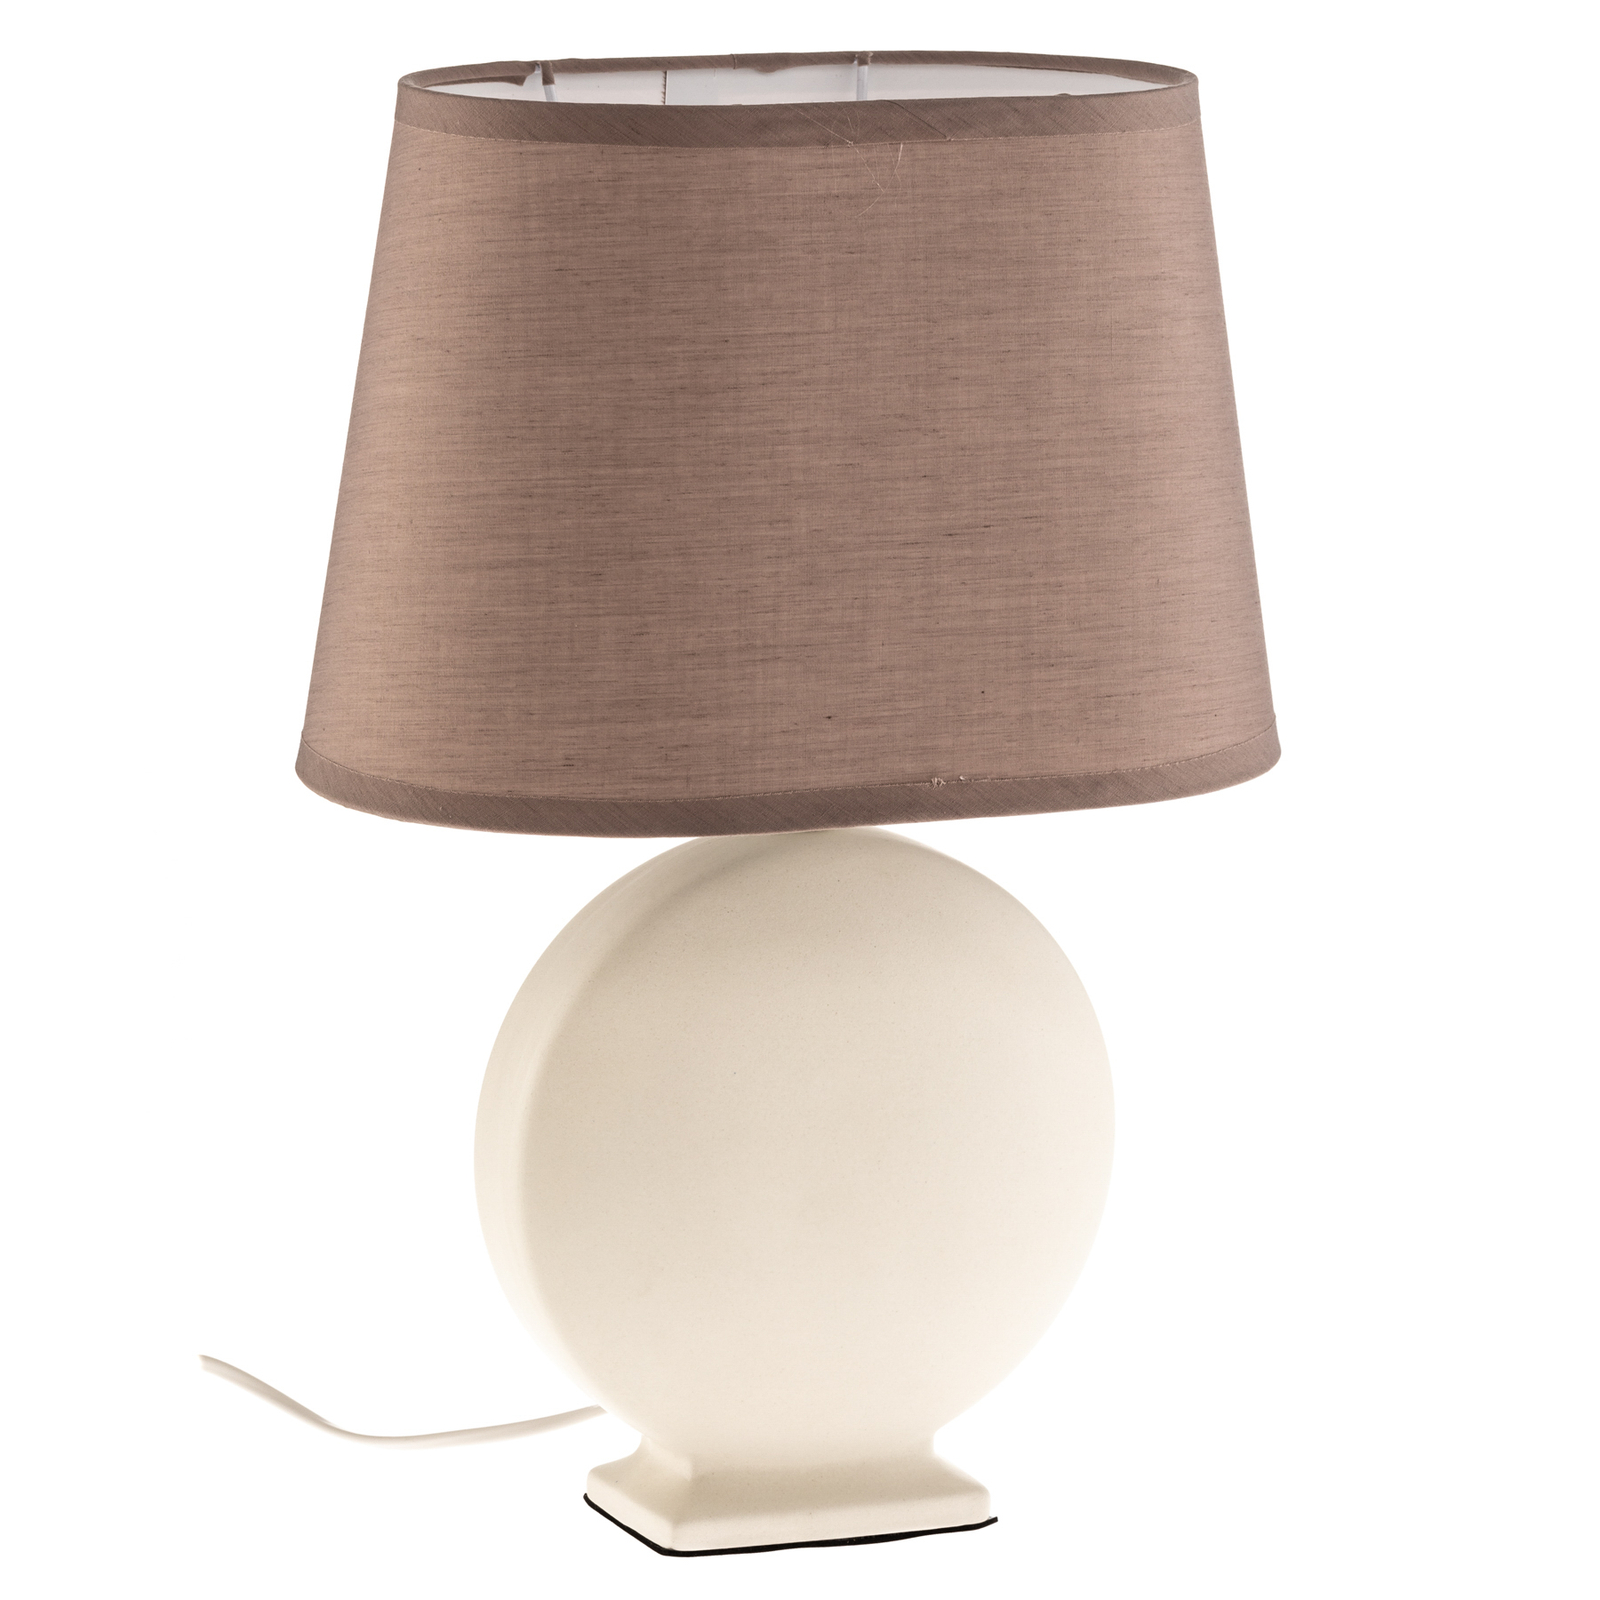 Zen table lamp, beige lampshade ceramic base 46 cm